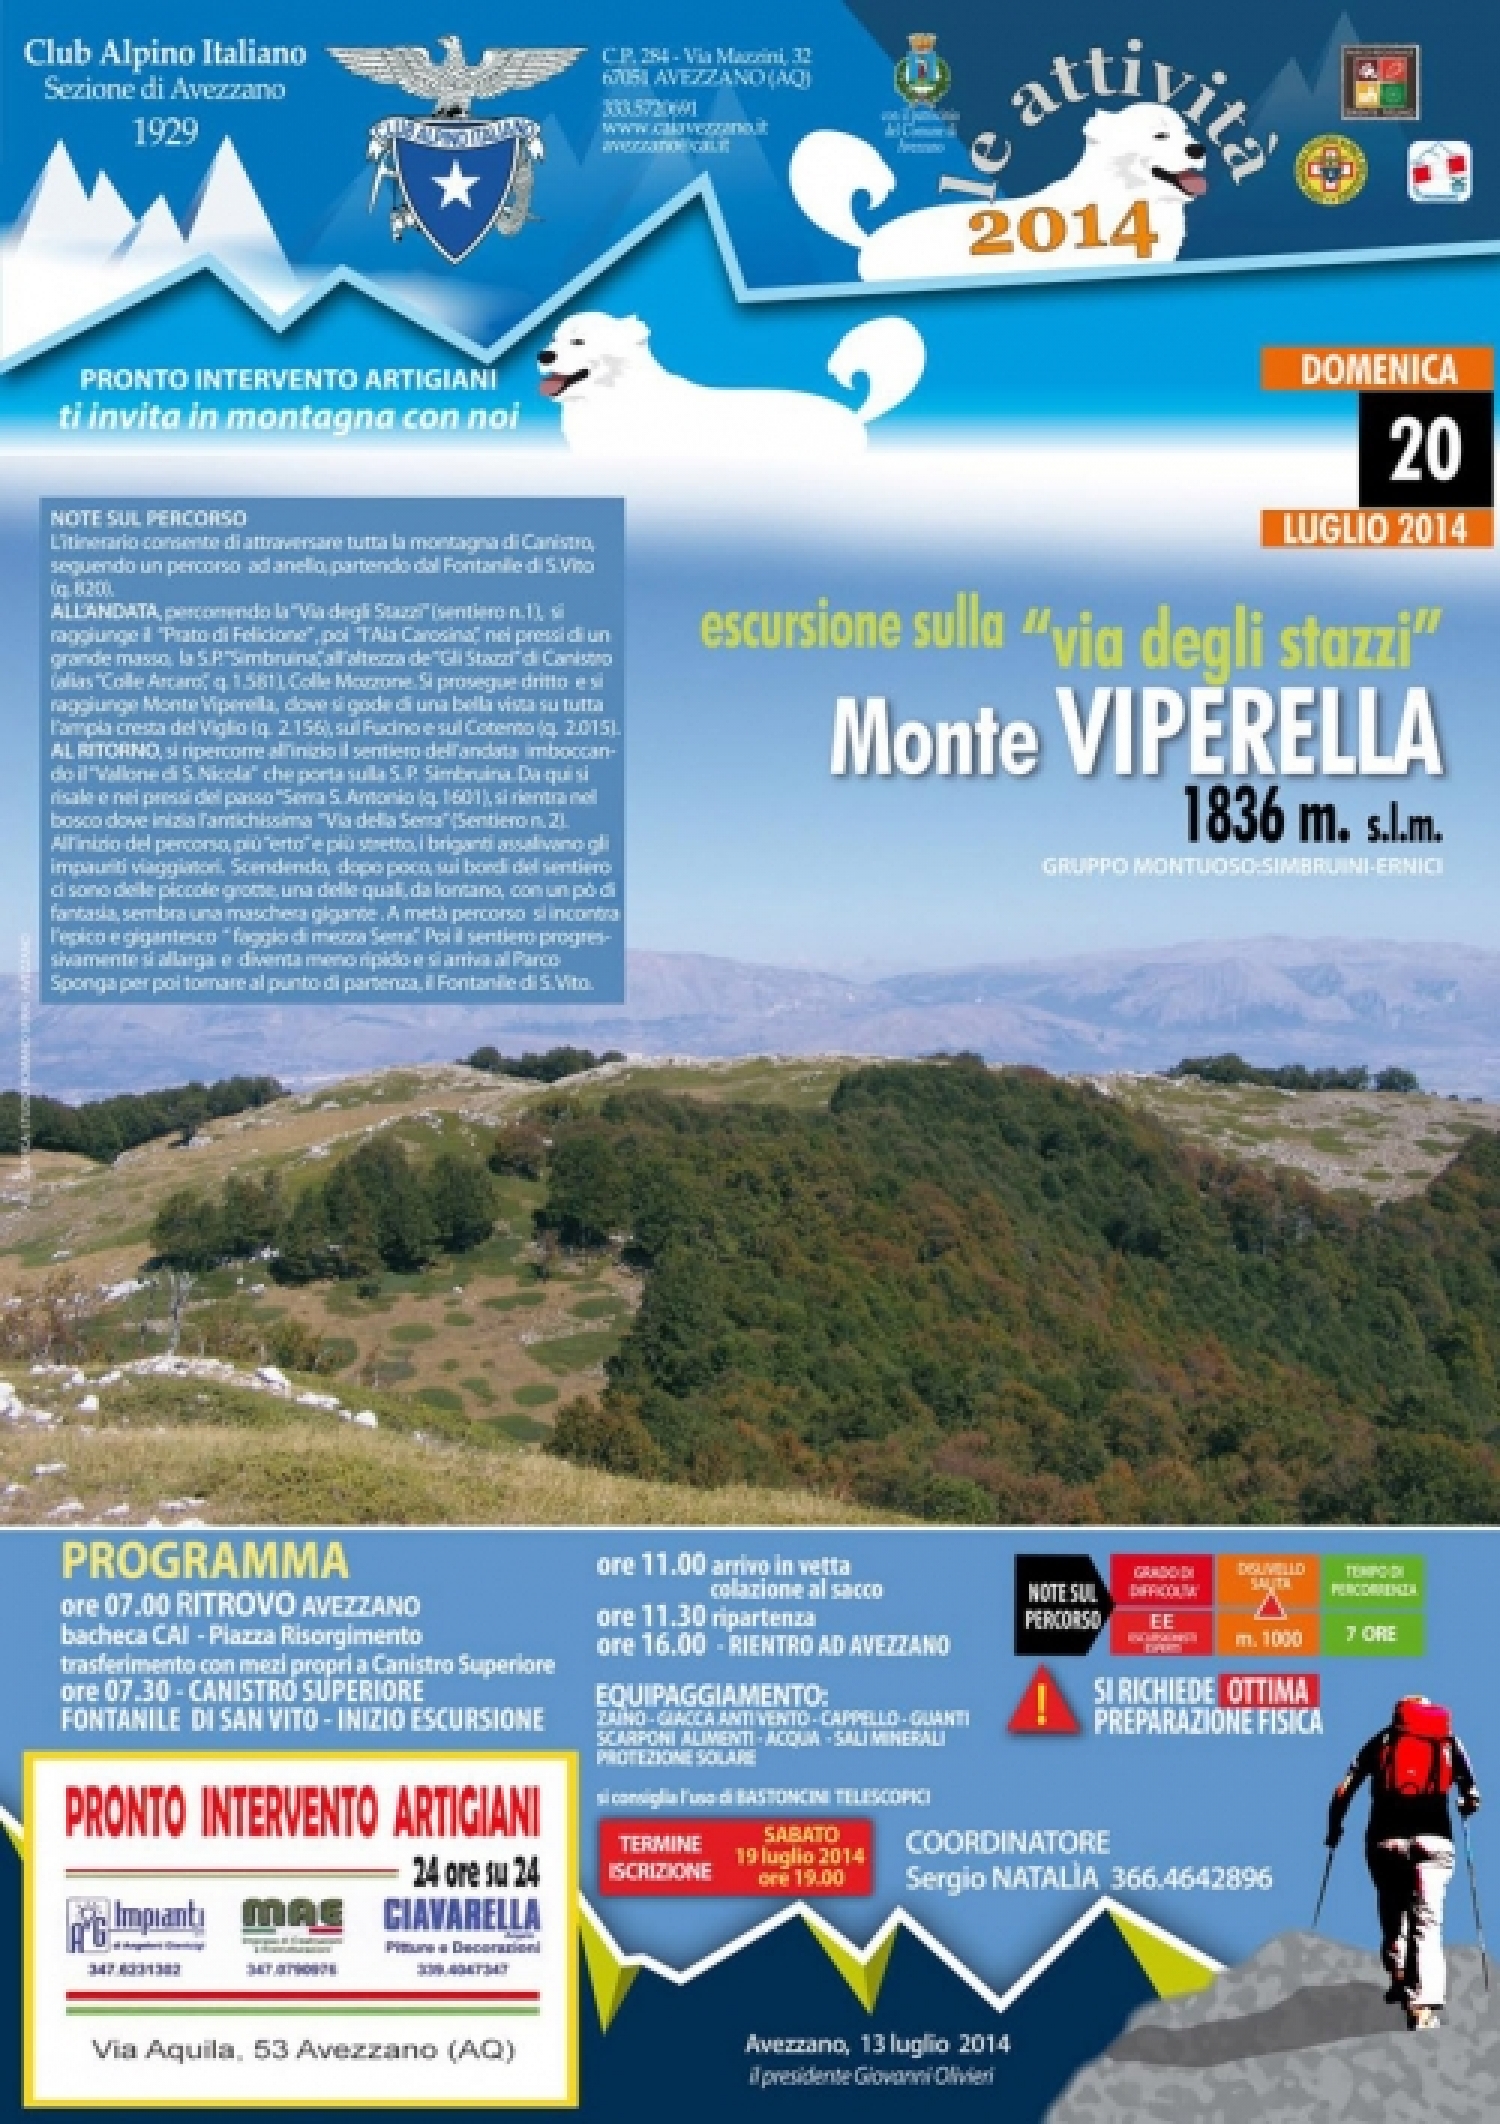 LOCANDINA MONTE VIPERELLA 20 LUG. 2014.jpg